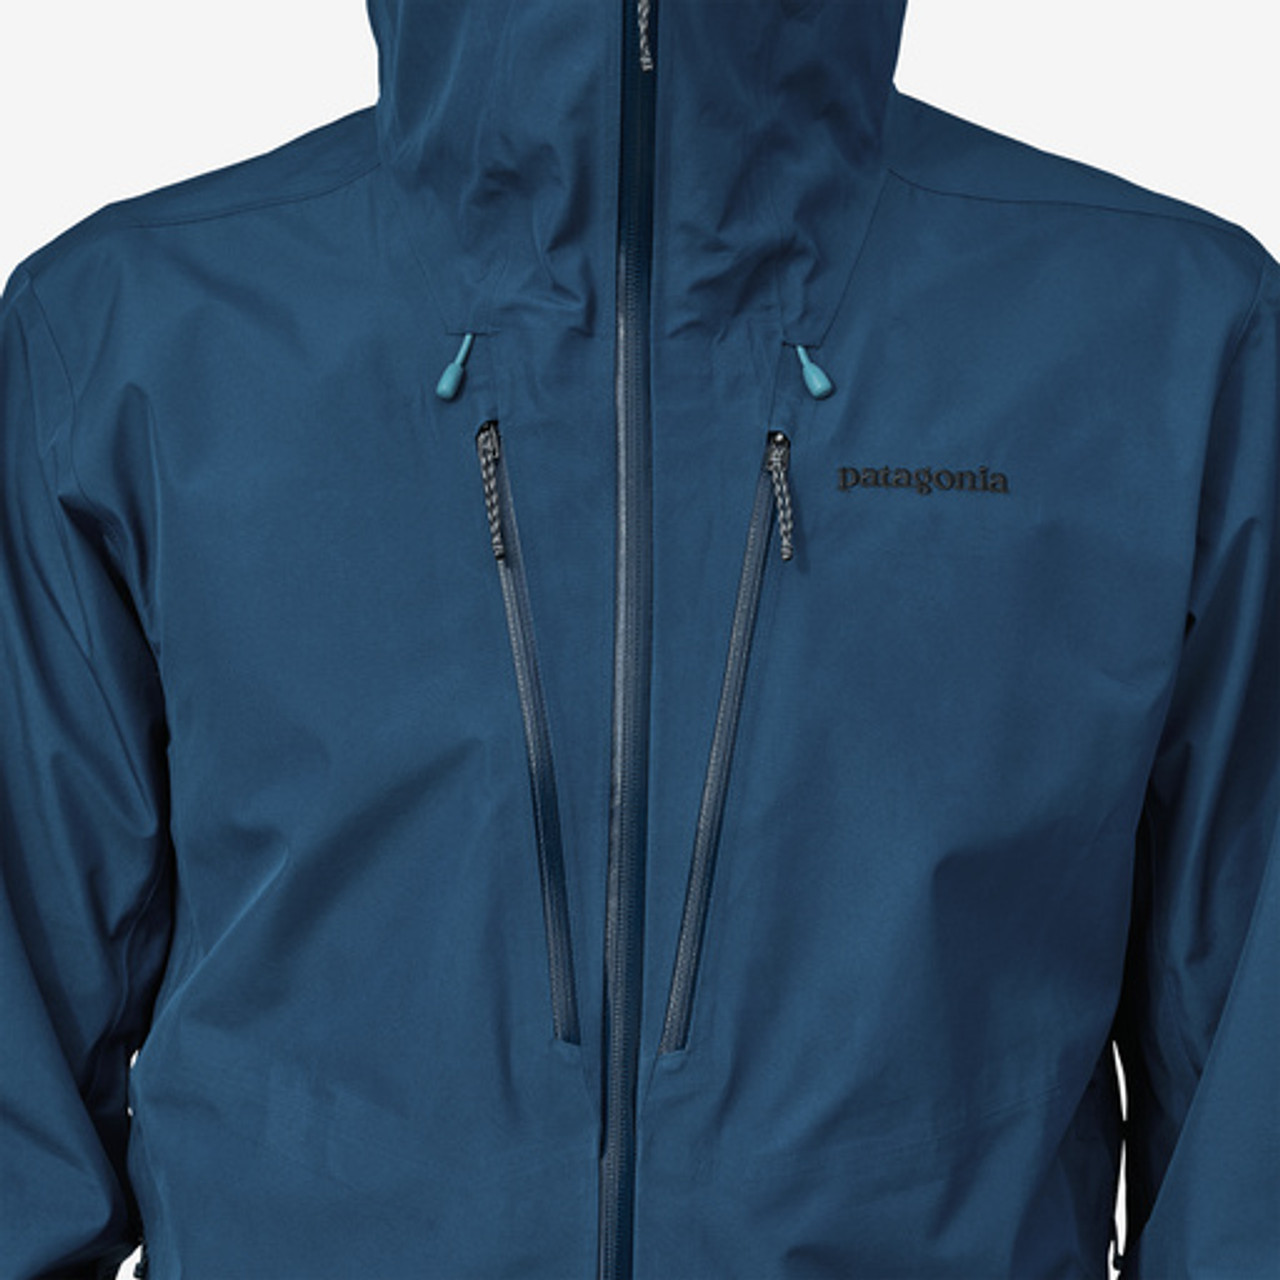 Patagonia Men's Triolet Jacket - Sandhill Rust Size (Clothing) Medium